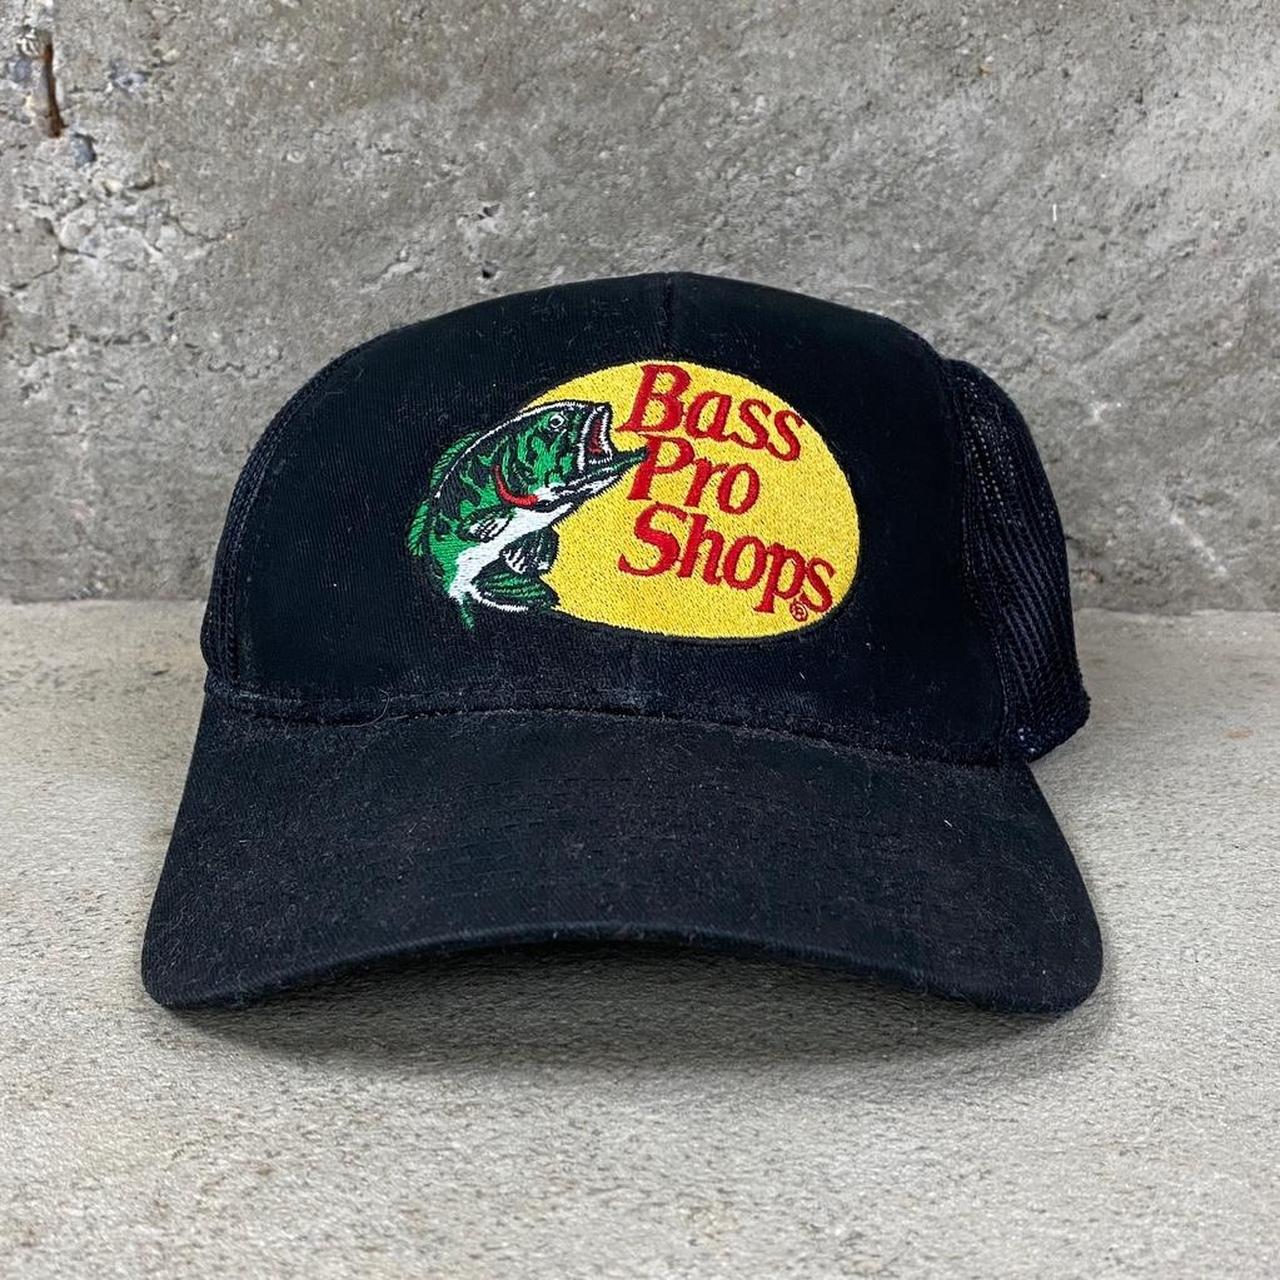 Vintage Bass Pro Shop Trucker SnapBack Hat Black - Depop